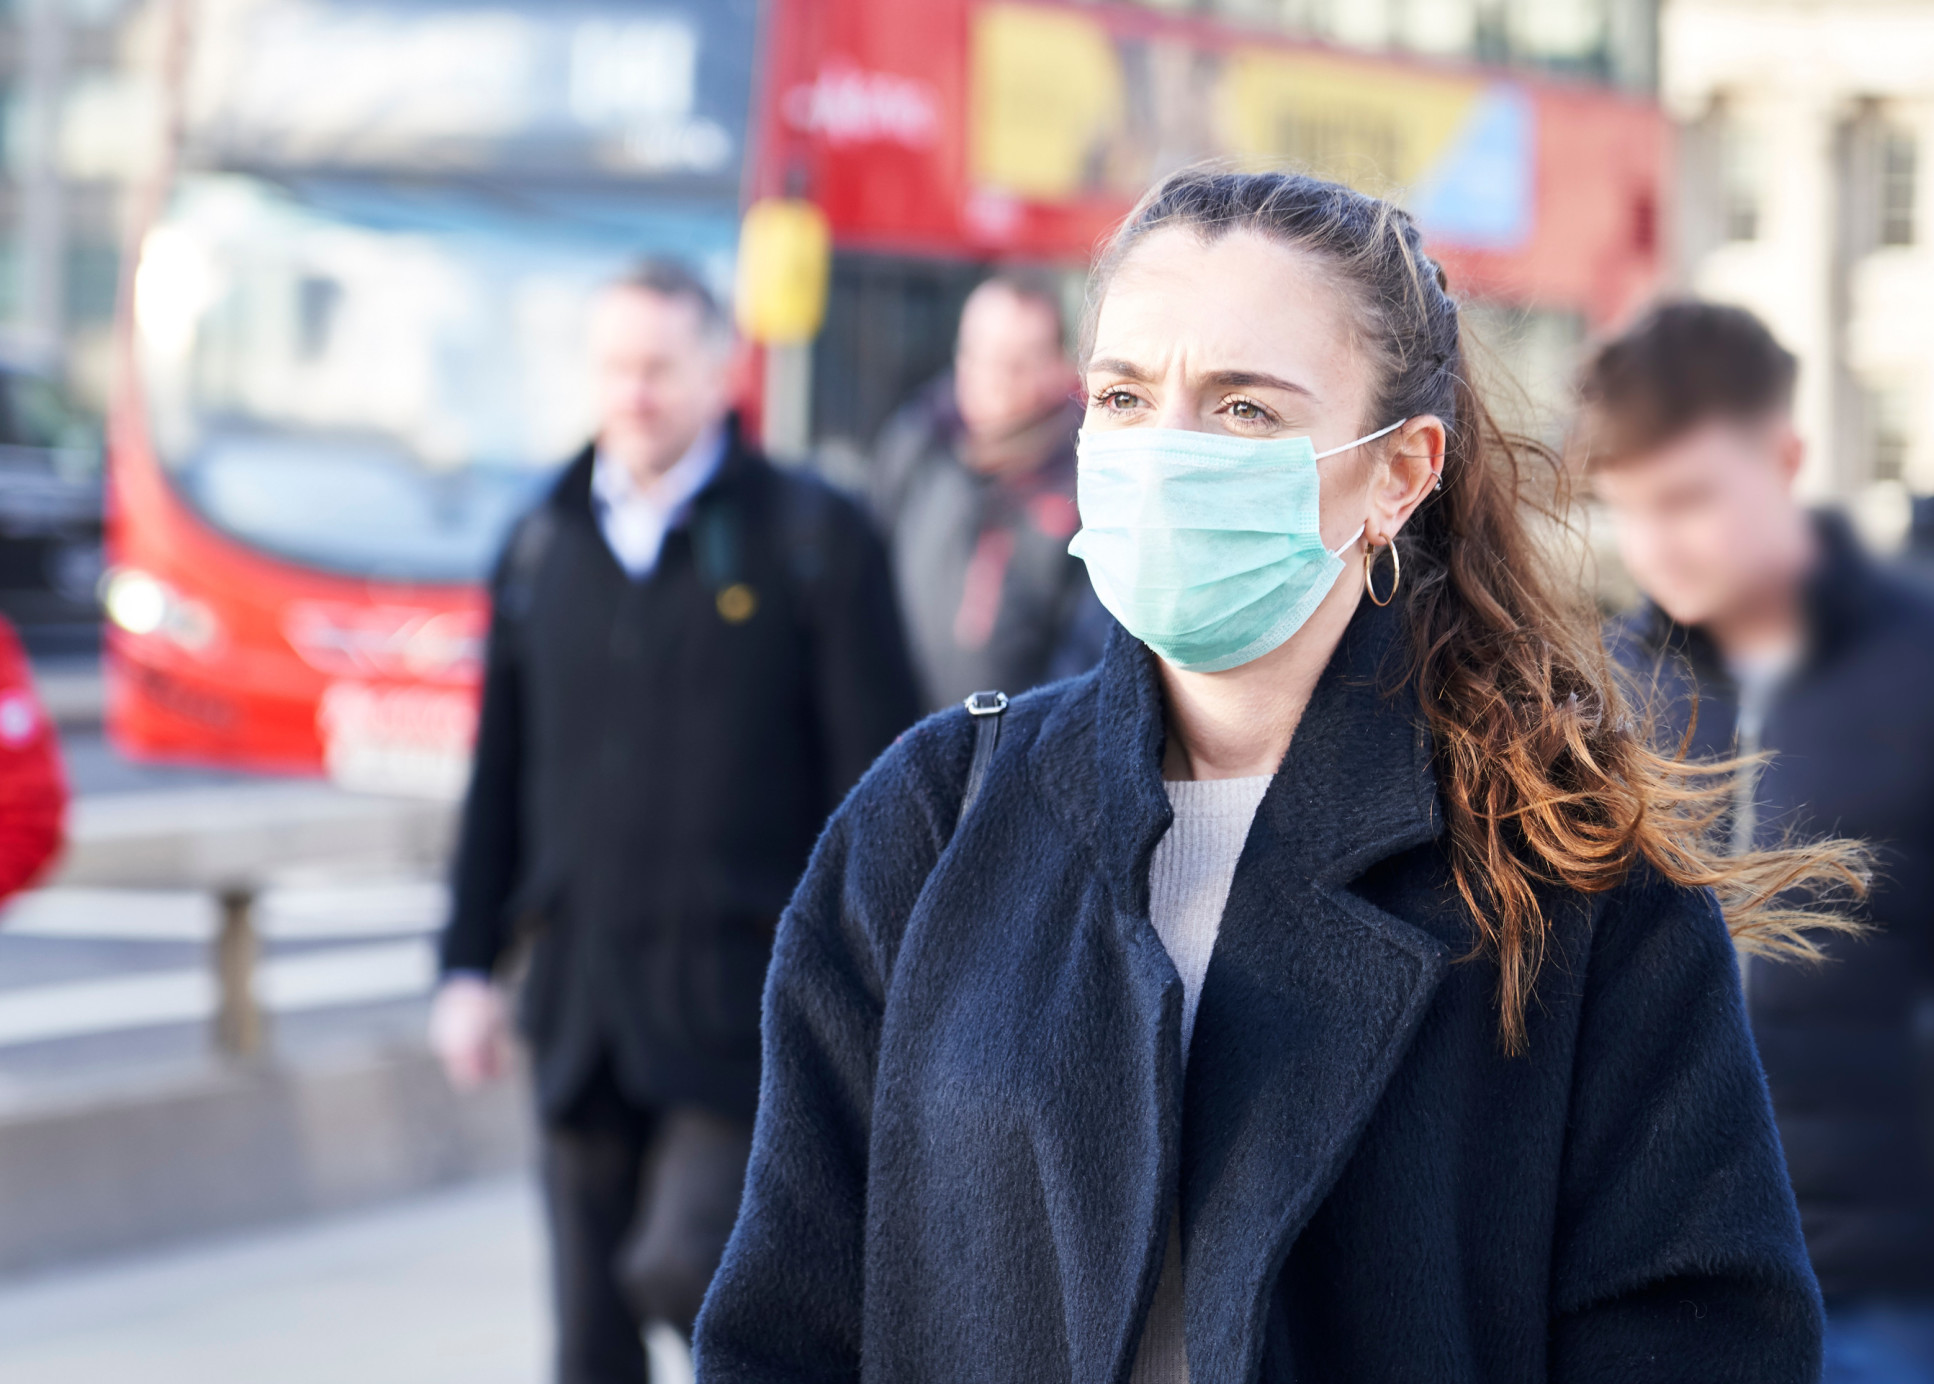 Woman wearing medical mask walks down London street